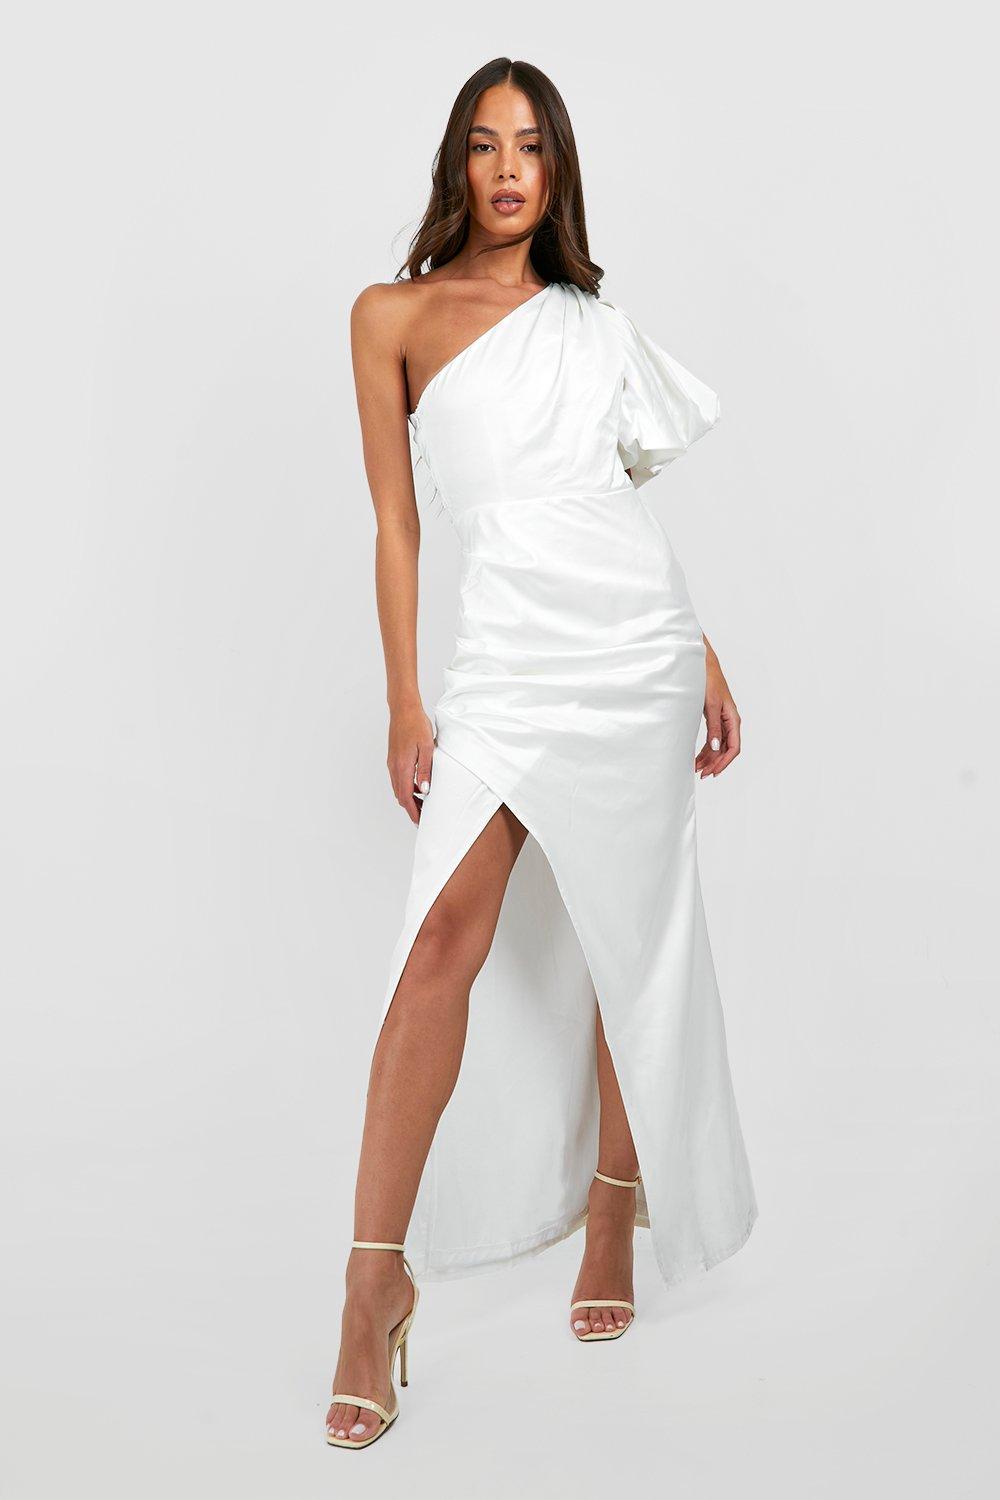 One Shoulder white Dress long sleeve